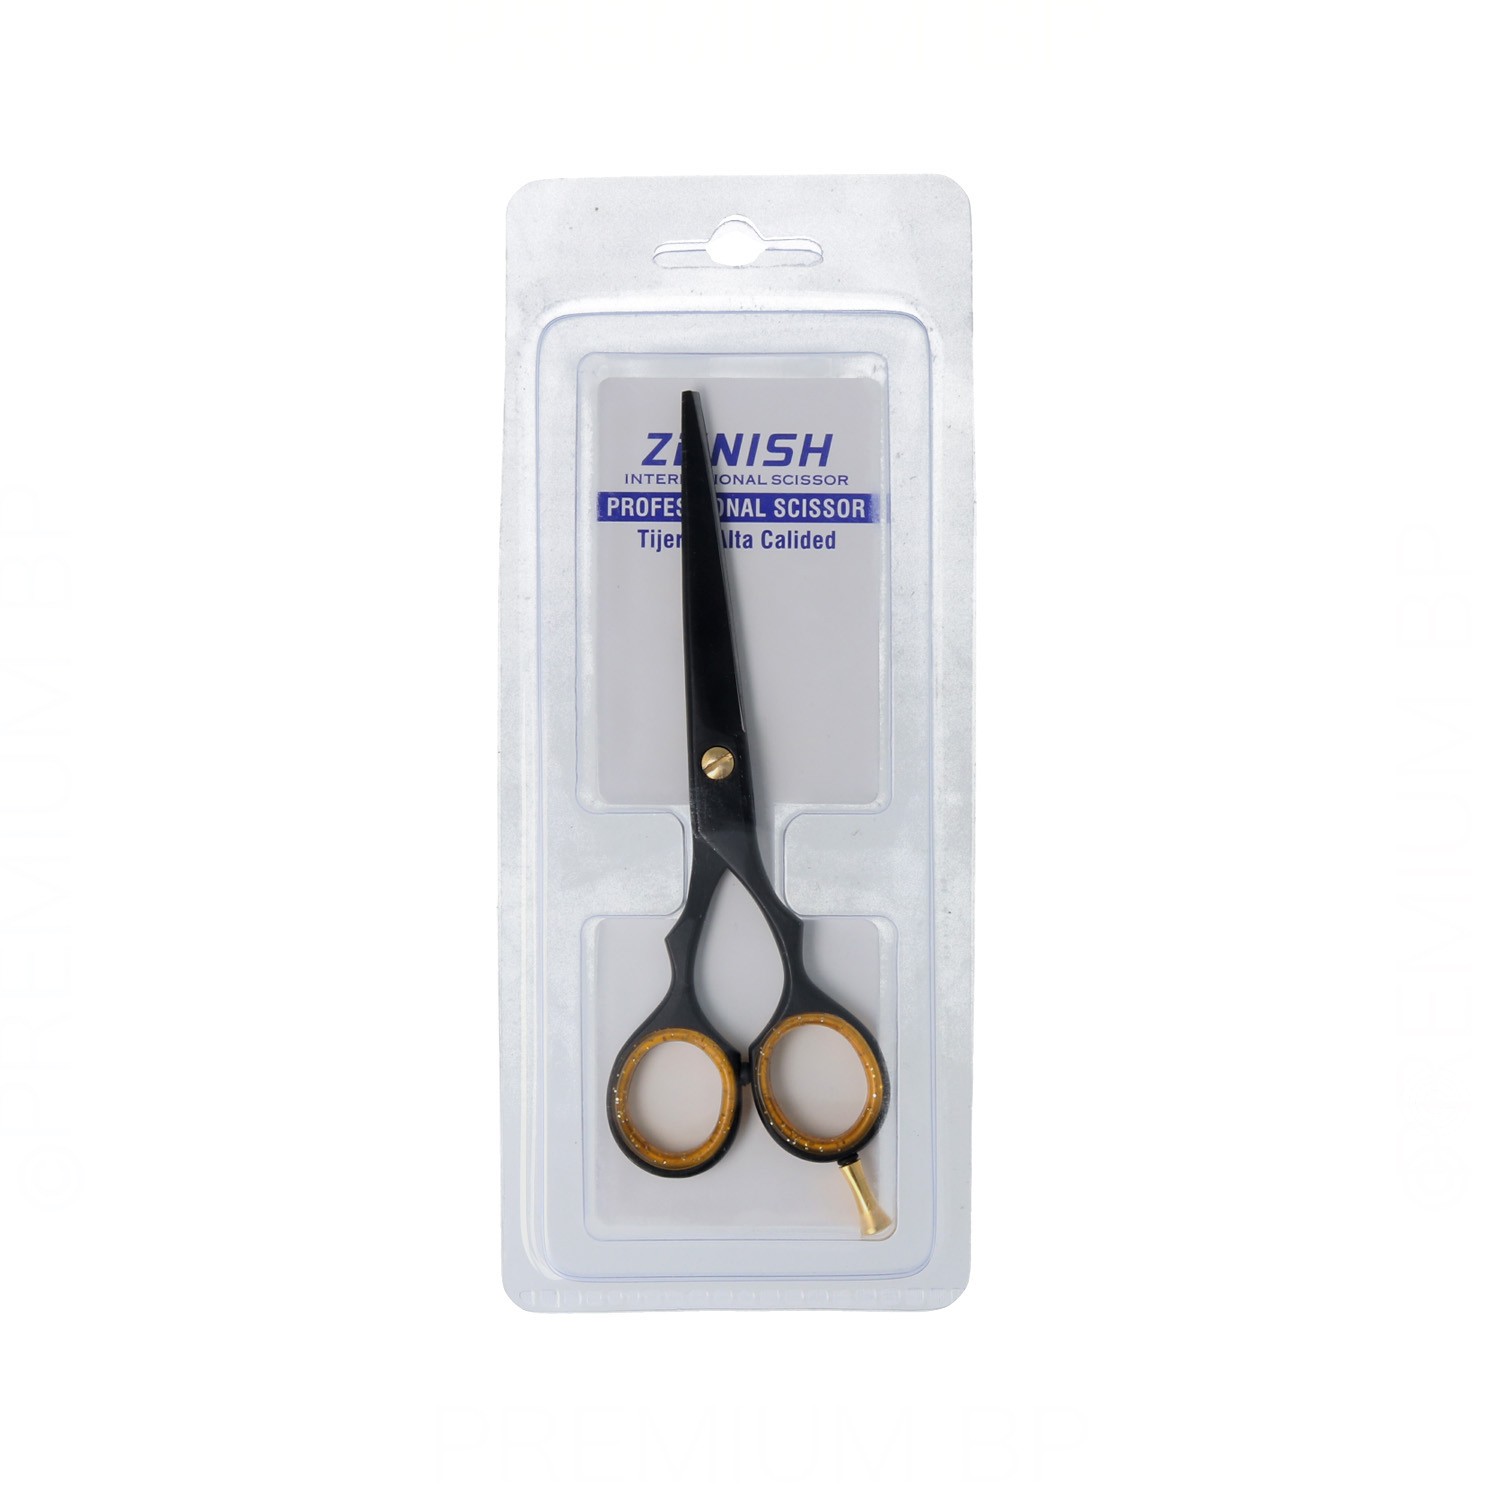 Zenish Professional Scissors Metal Black/Yellow 6"